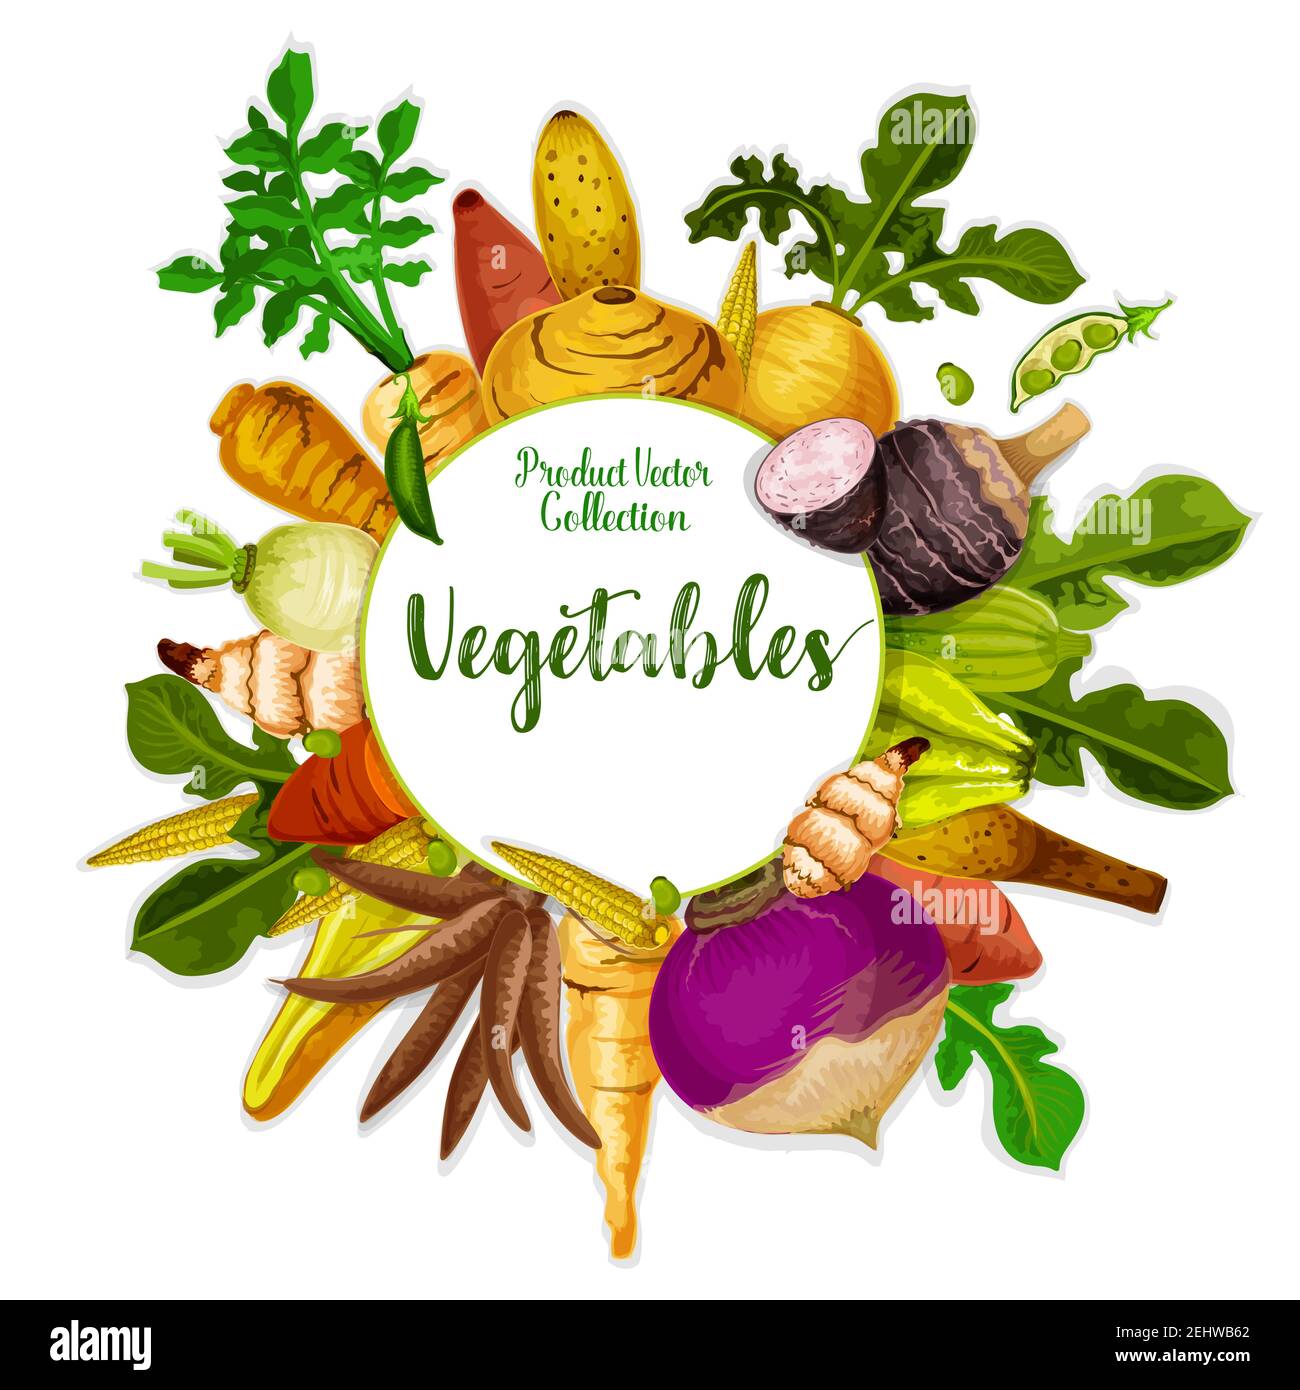 Vegetable tuber roots and farm veggies. Vector vegan sweet potato, radish or turnip and legume bread beans with jicama and cassava manioc. Vegetarian Stock Vector